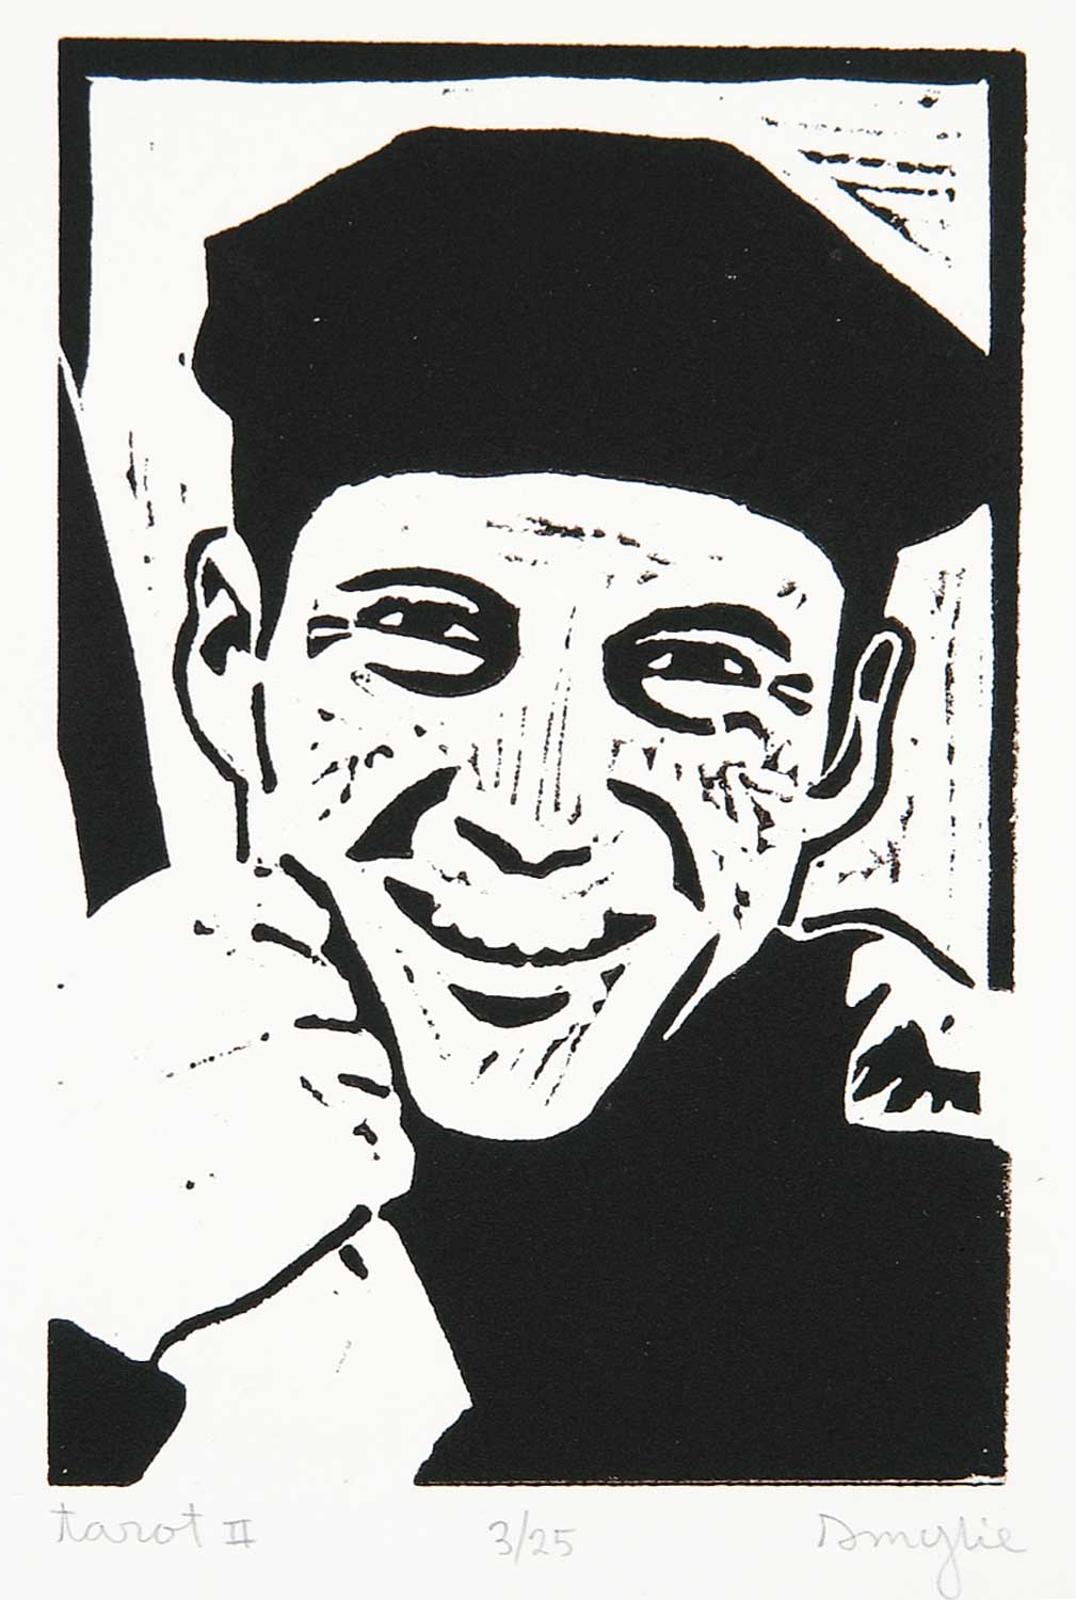 Barry Douglas Smylie (1948) - Tarot II  #3/25